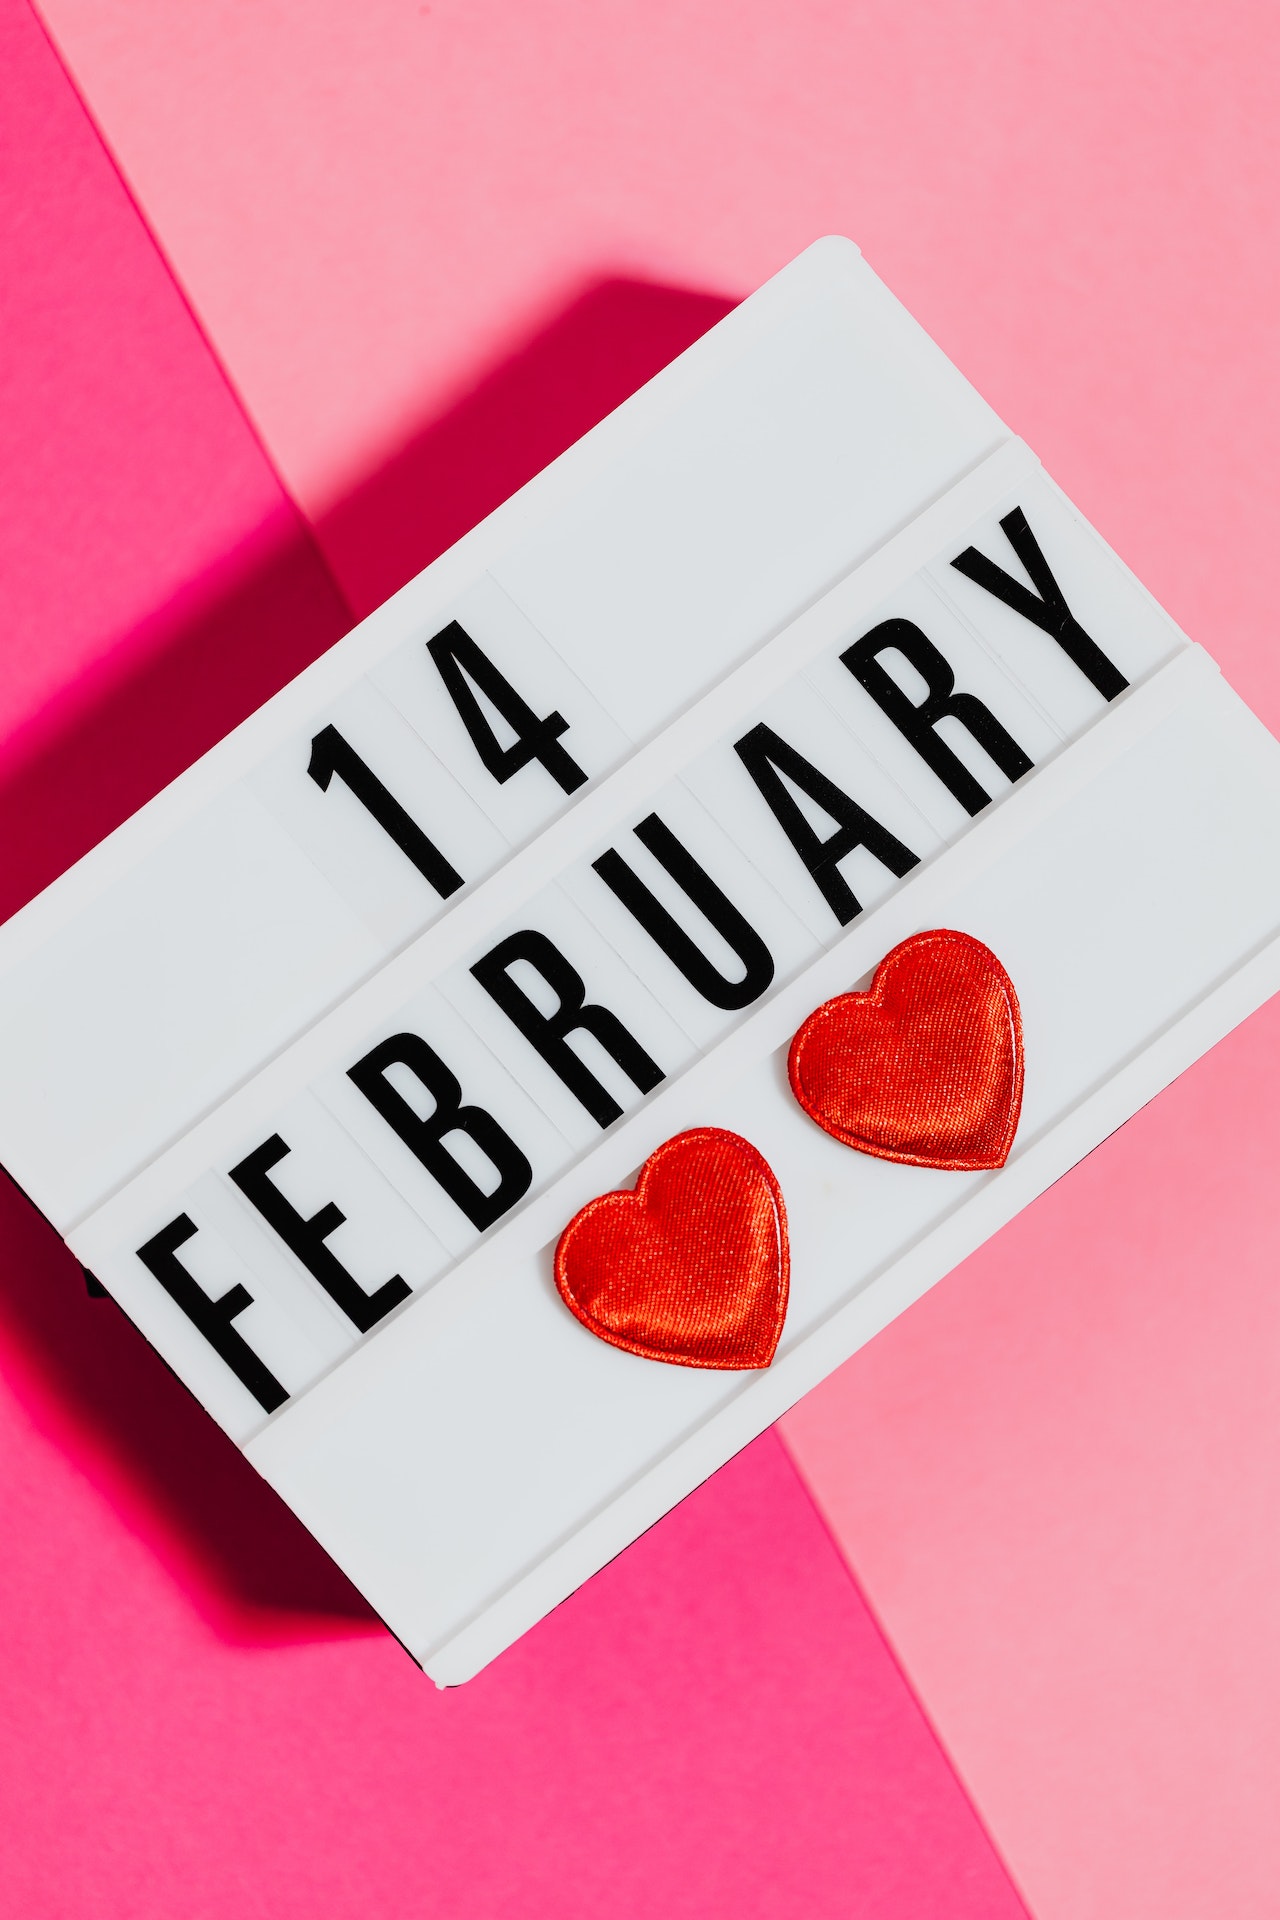 February 14th block Valentine's Day